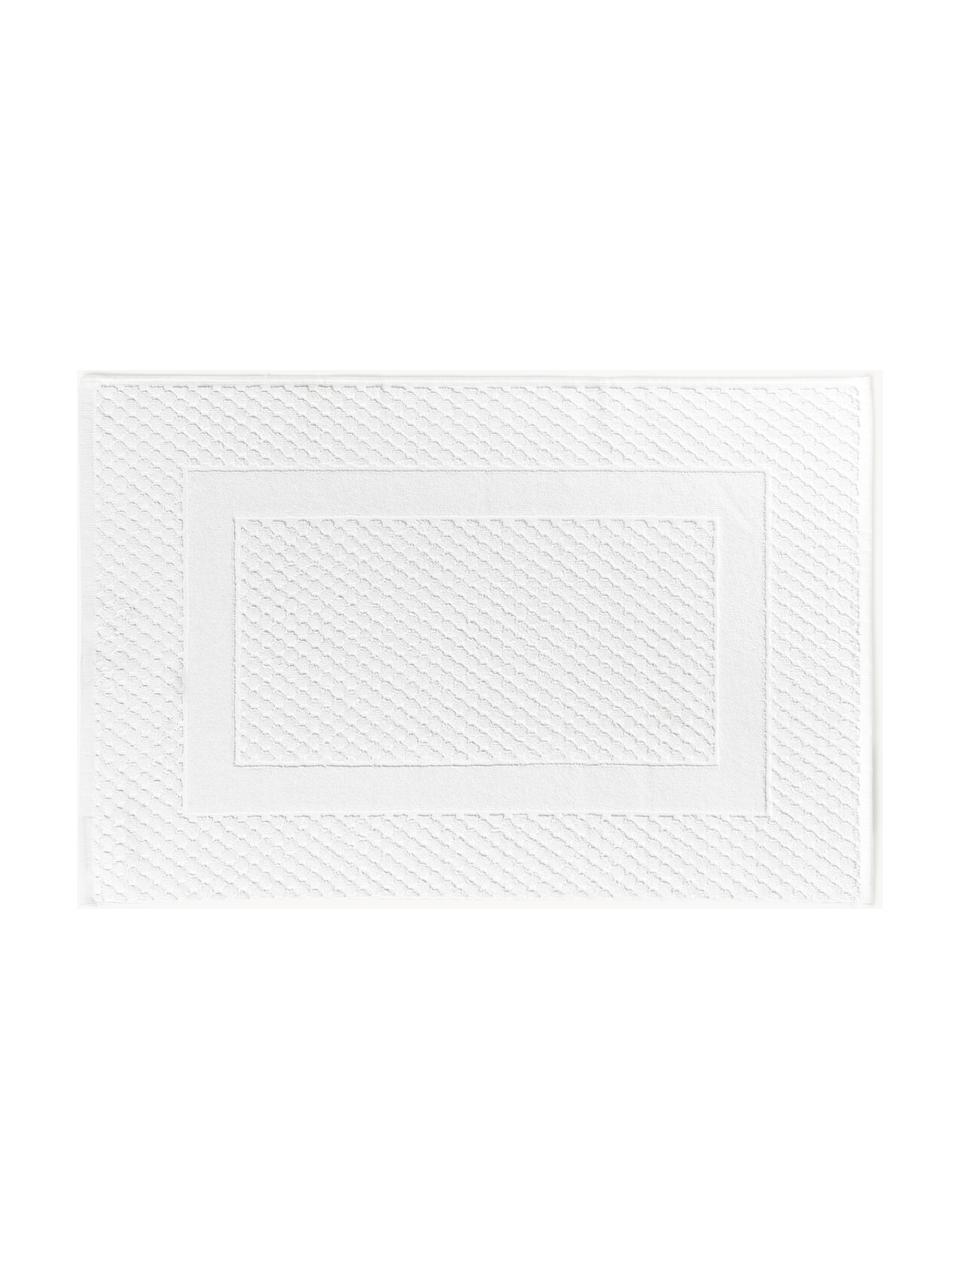 Alfombrilla de baño antideslizante con estampado de panal Katharina, Blanco, An 50 x L 70 cm